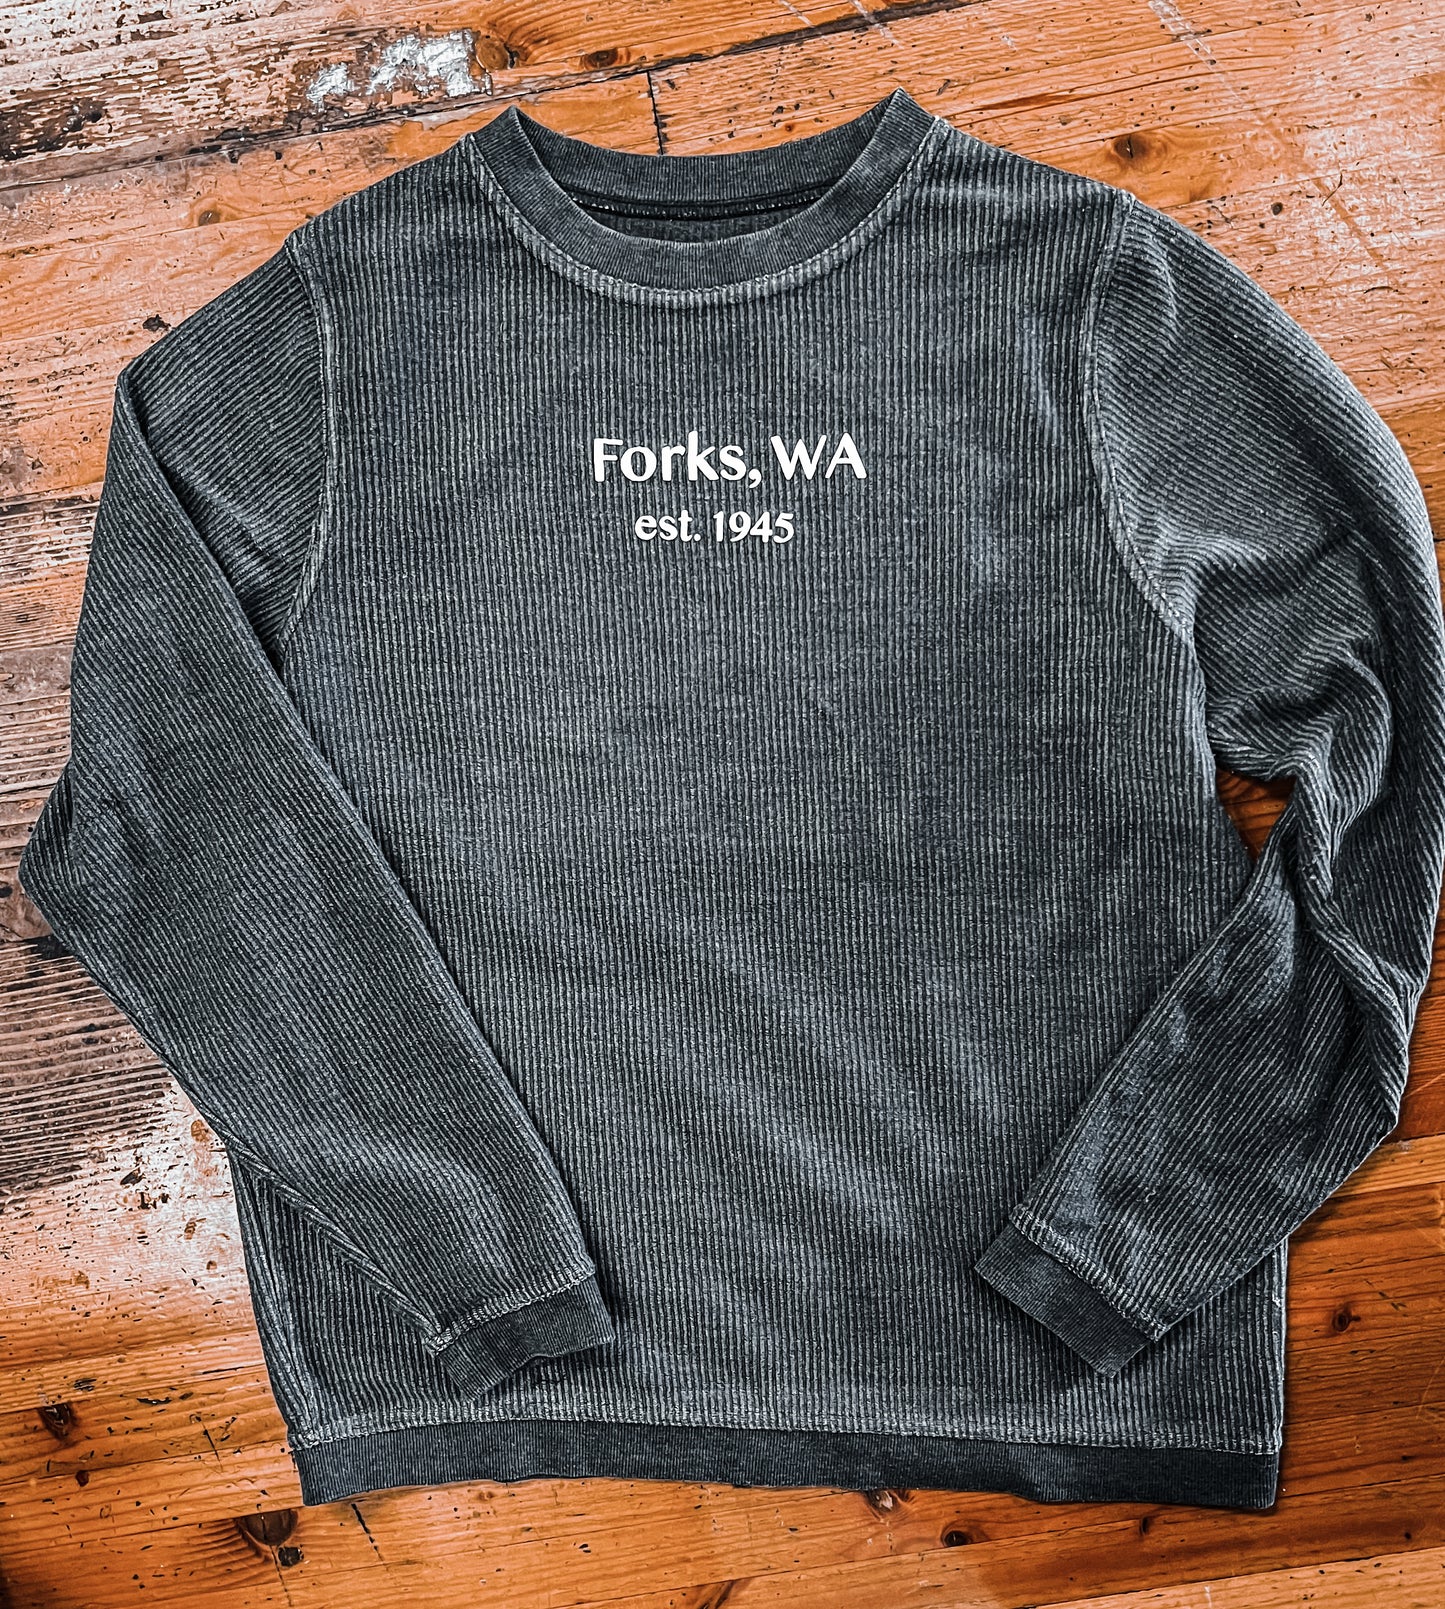 Navy Corduroy Sleeve Forks, WA Puff Sweater